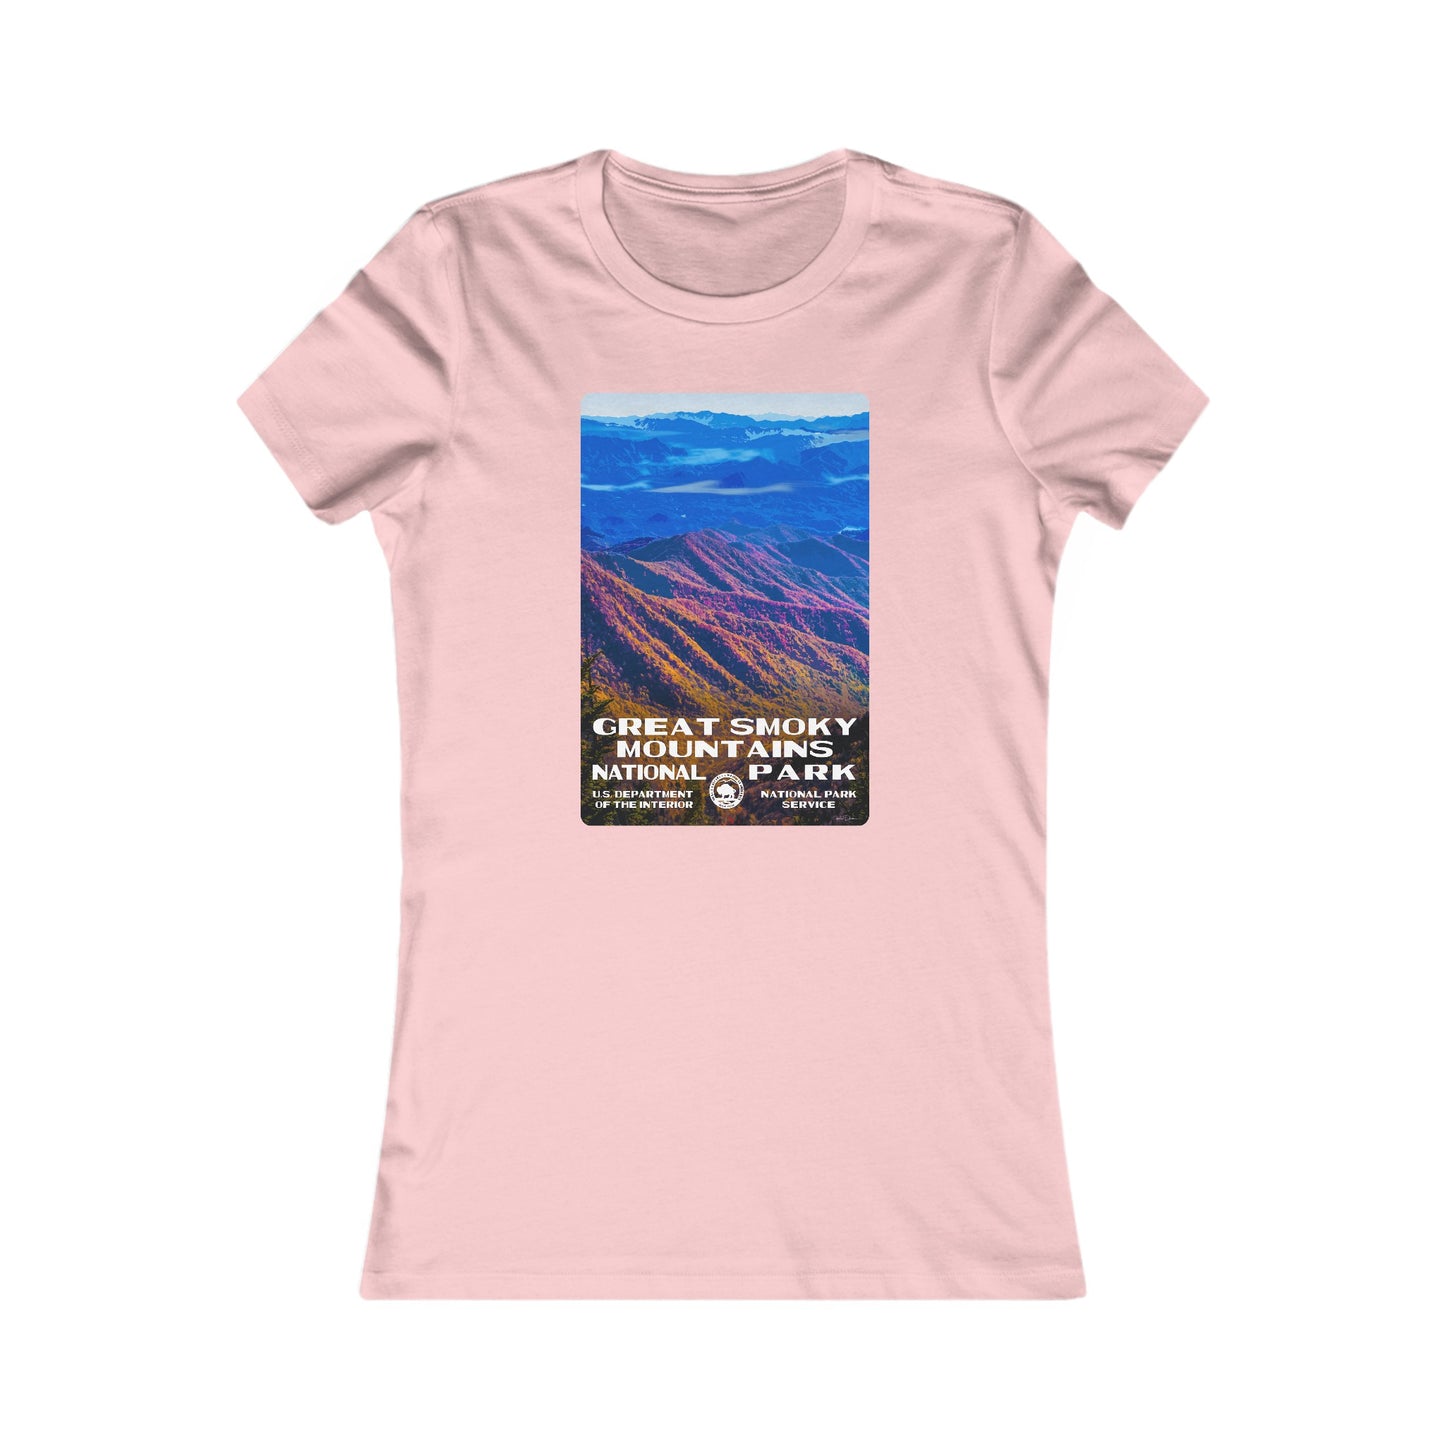 Great Smoky Mountains National Park Women's T-Shirt